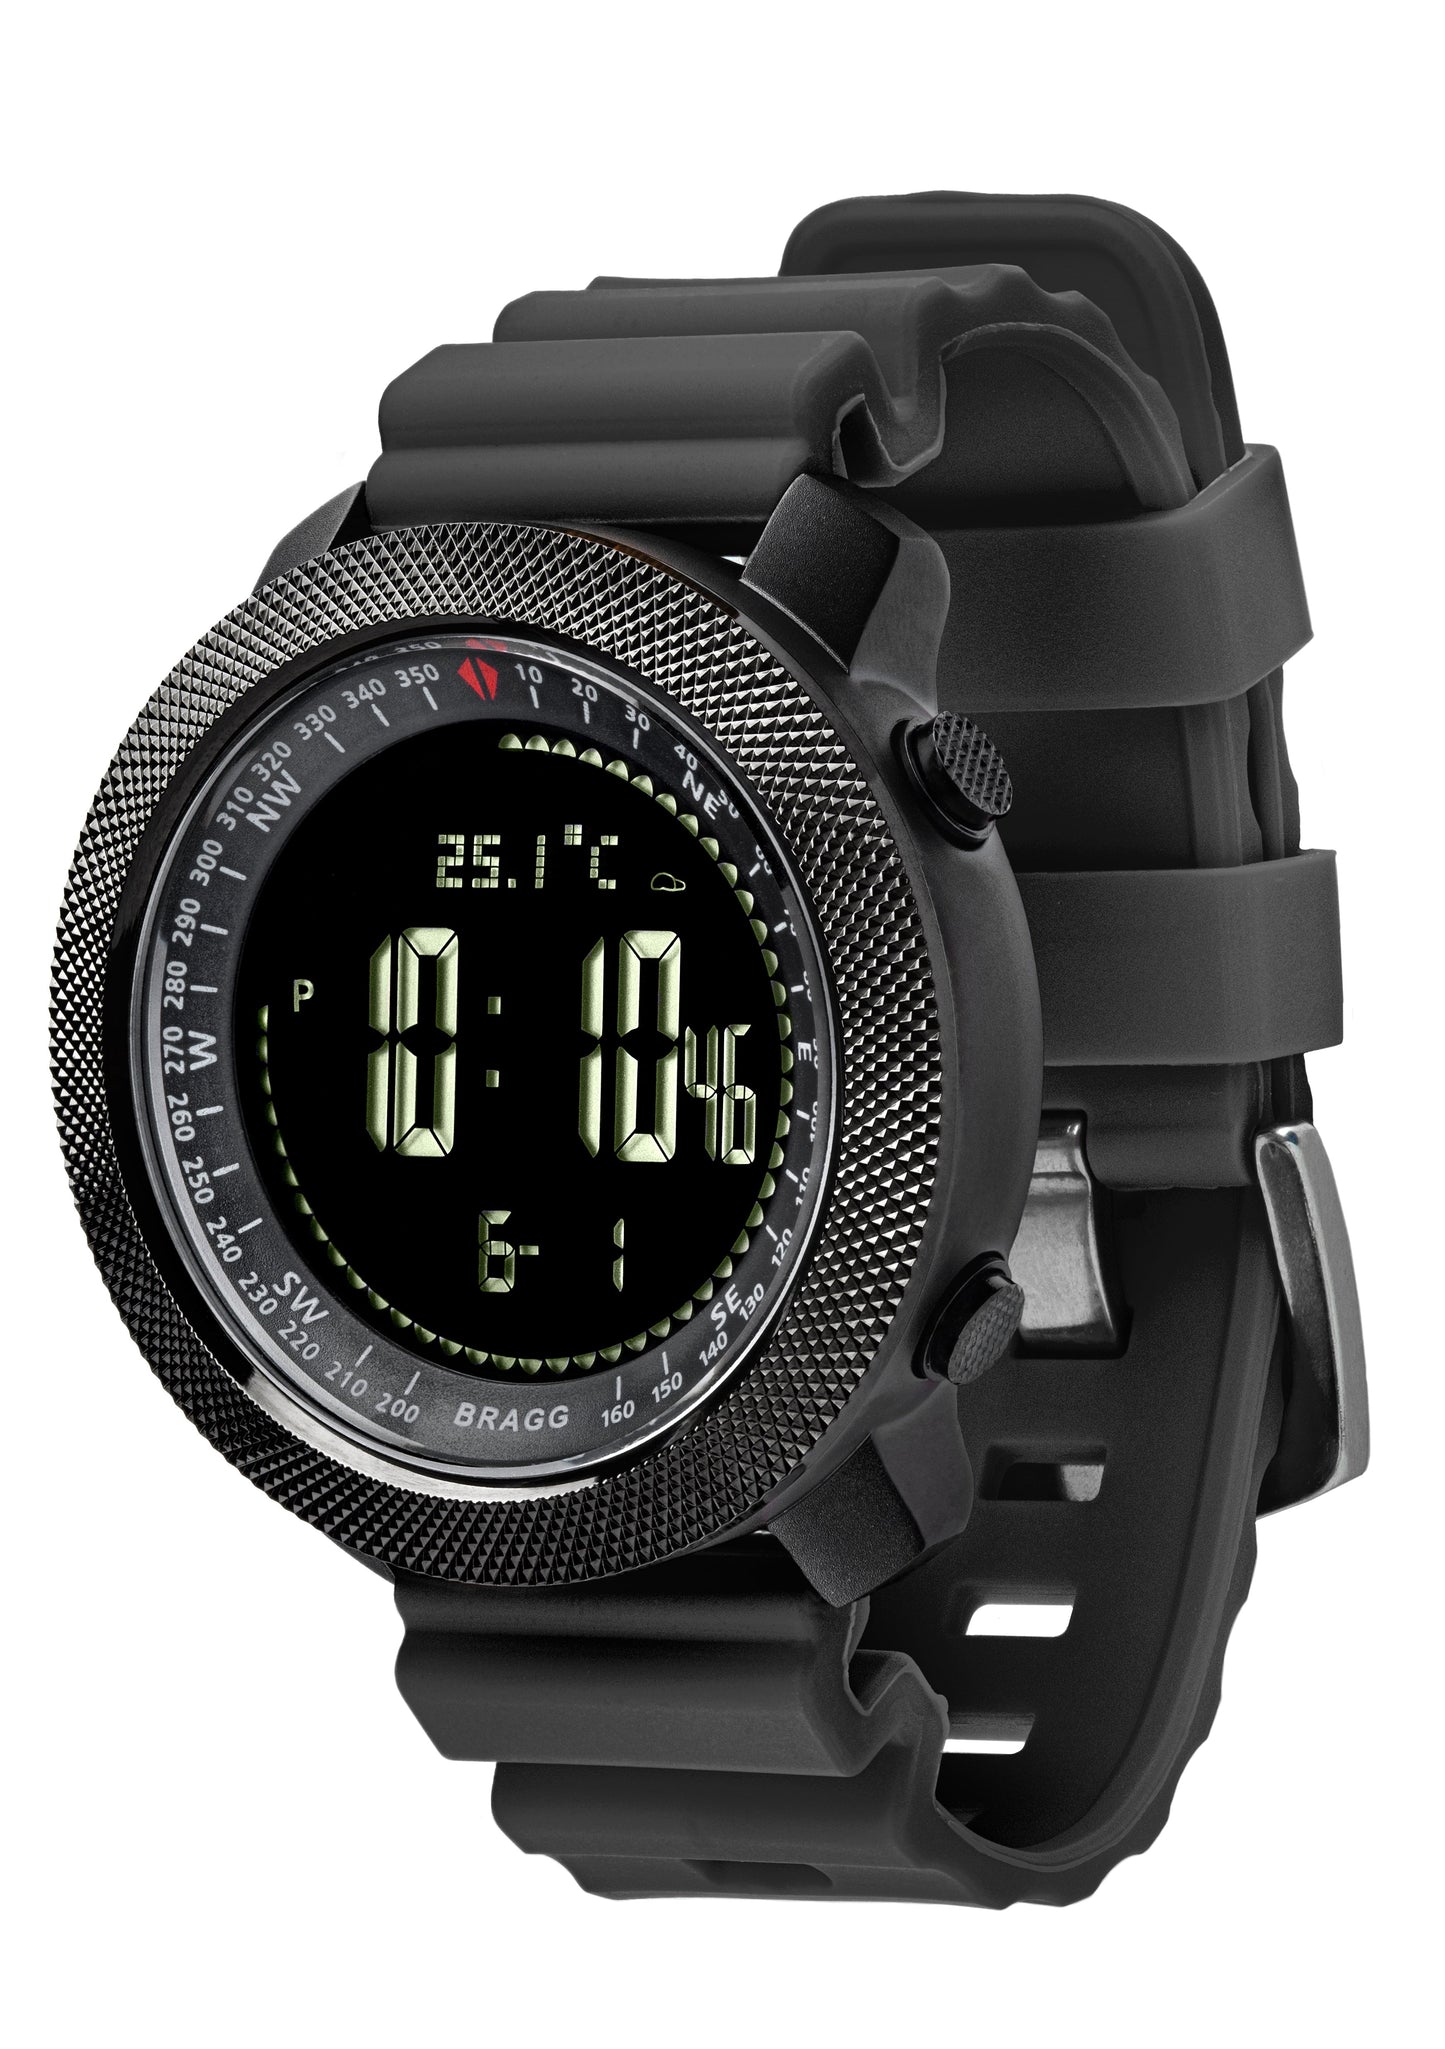 Bragg Black Ops Chrono watch with Black Silicone Watch Band Military Sports Digital Watch Bragg Watch 